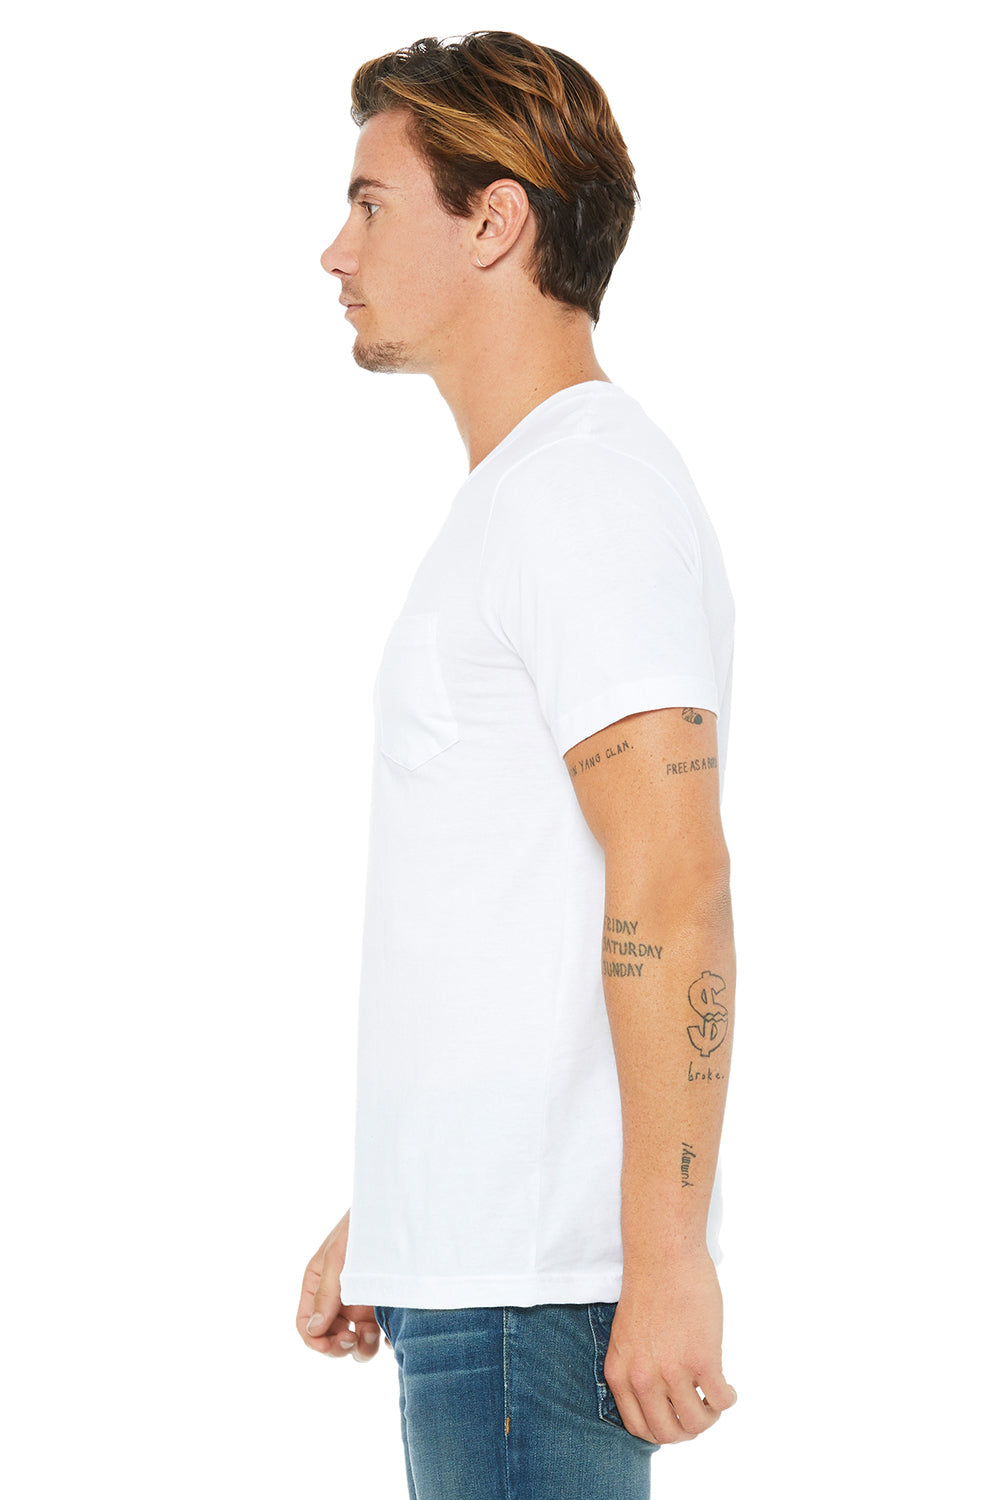 Bella + Canvas 3021 Mens Jersey Short Sleeve Crewneck T-Shirt w/ Pocket White Model Side